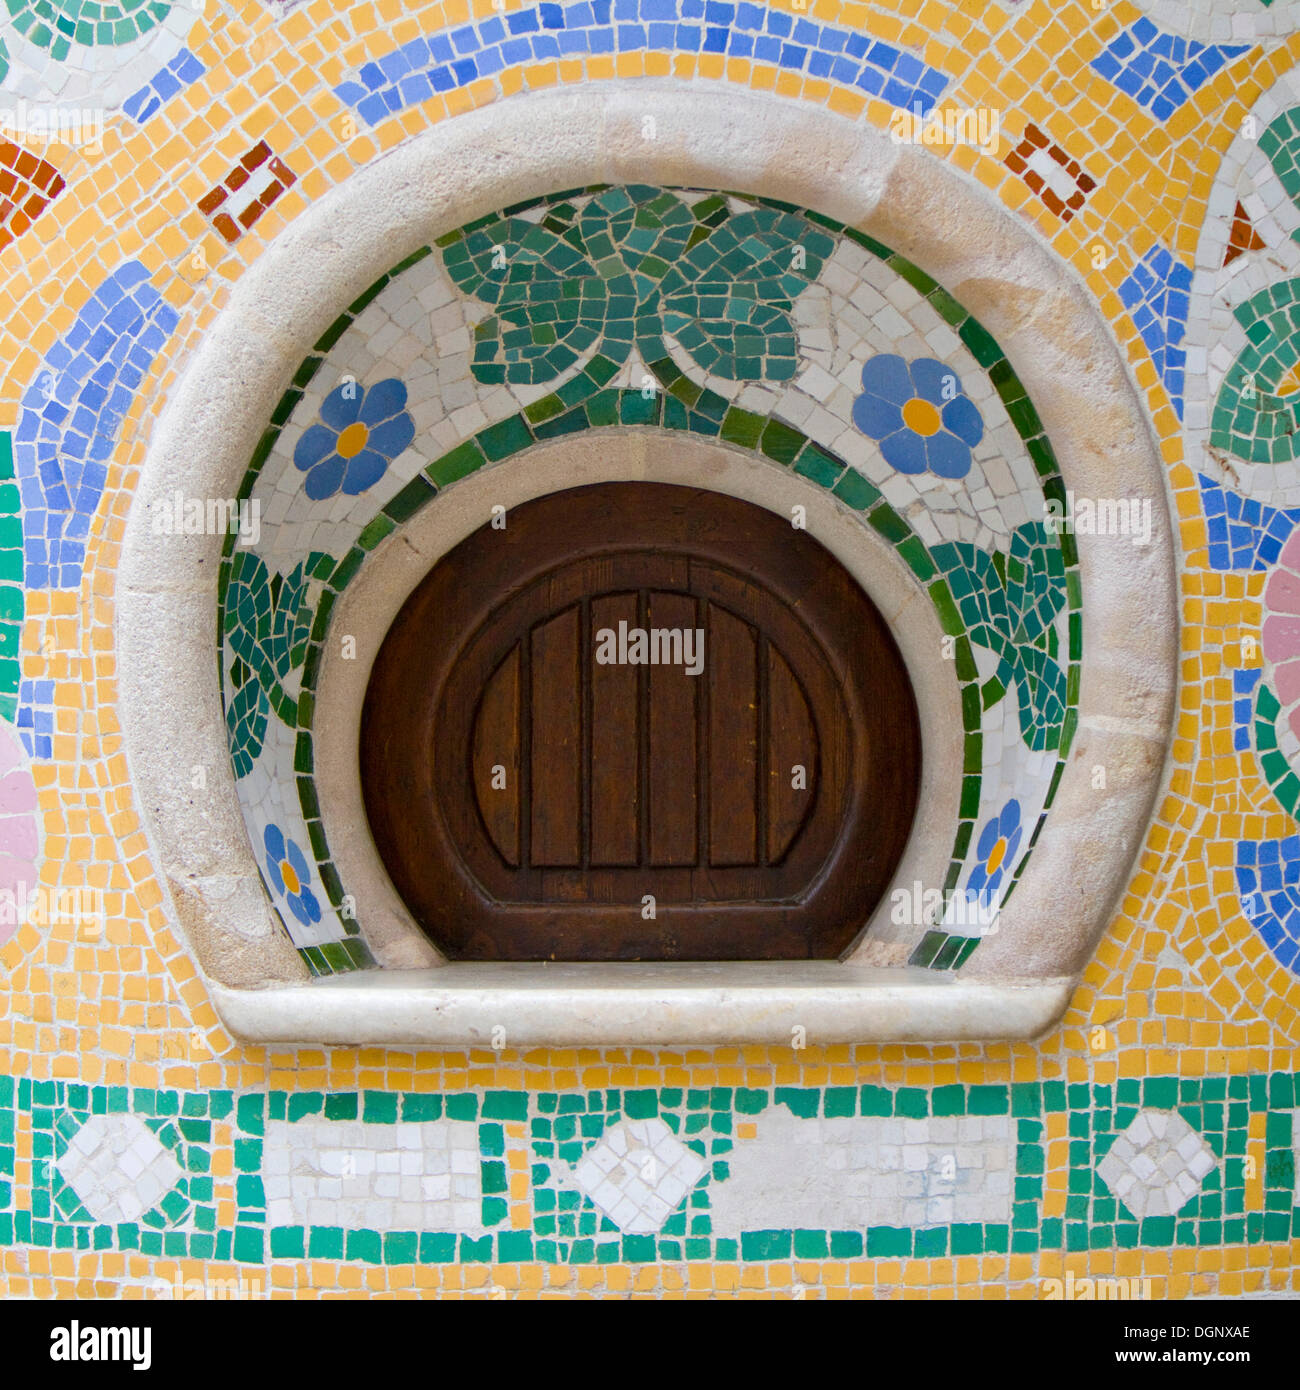 Mosaic on the facade of the Palau de la Musica Catalana concert hall, UNESCO World Heritage Site, Barcelona, Catalonia, Spain Stock Photo